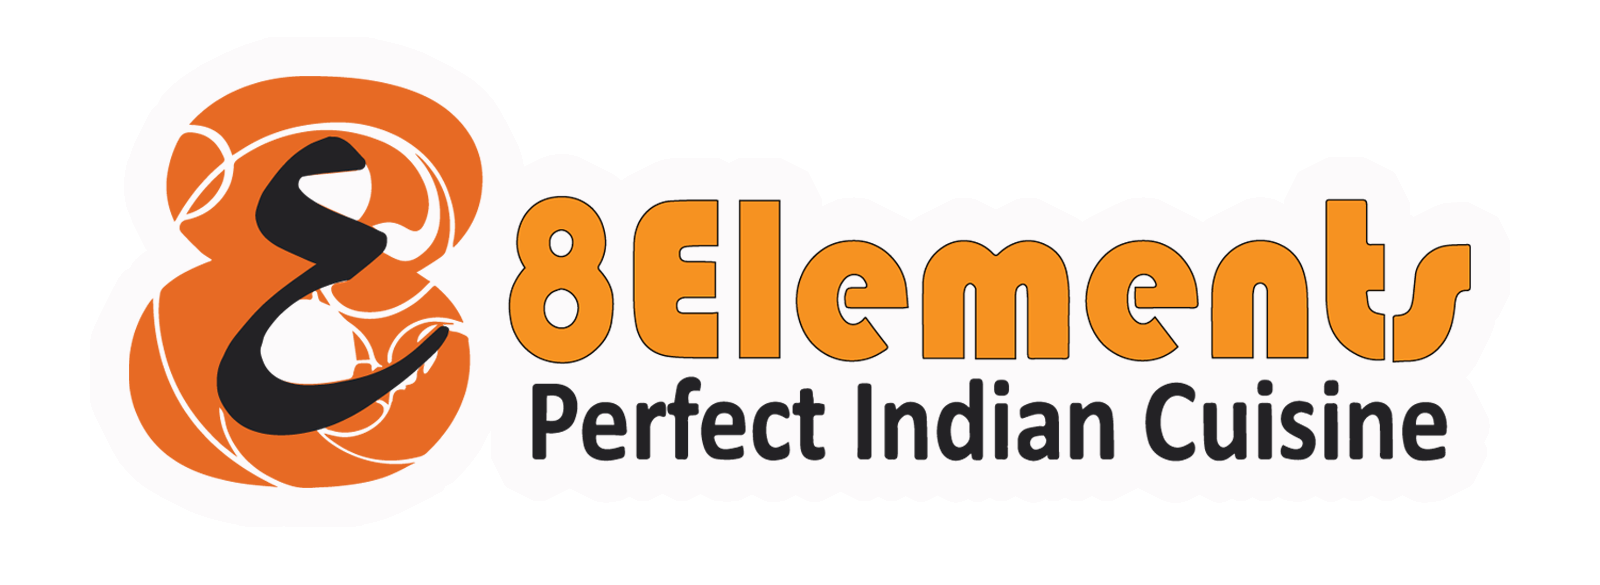 8 Elements - Perfect Indian Cuisine